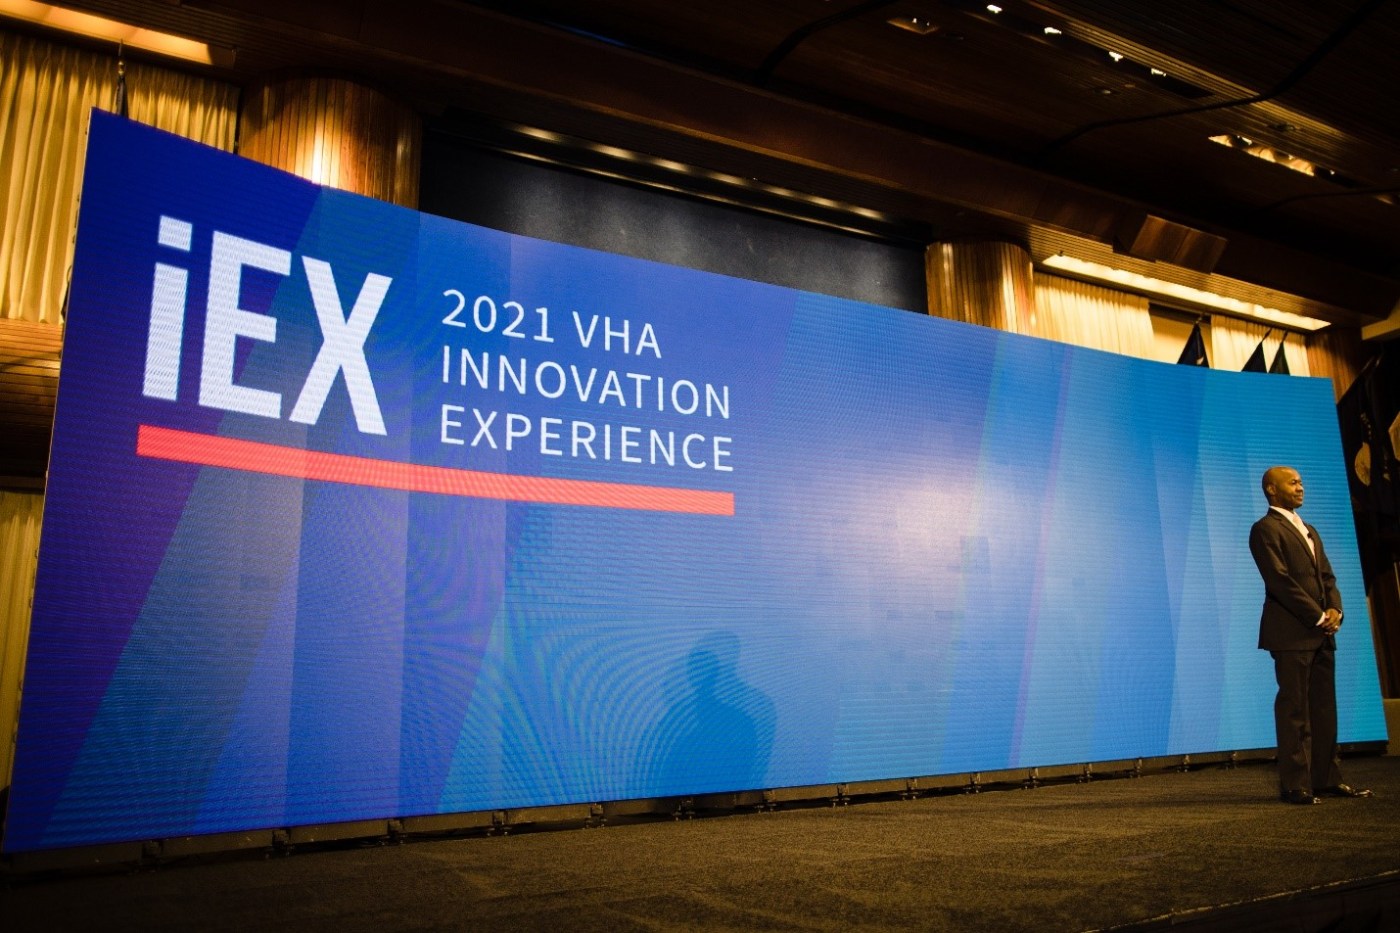 VHA Innovation Experience 2021 breaks boundaries with Veteran-impacting innovation